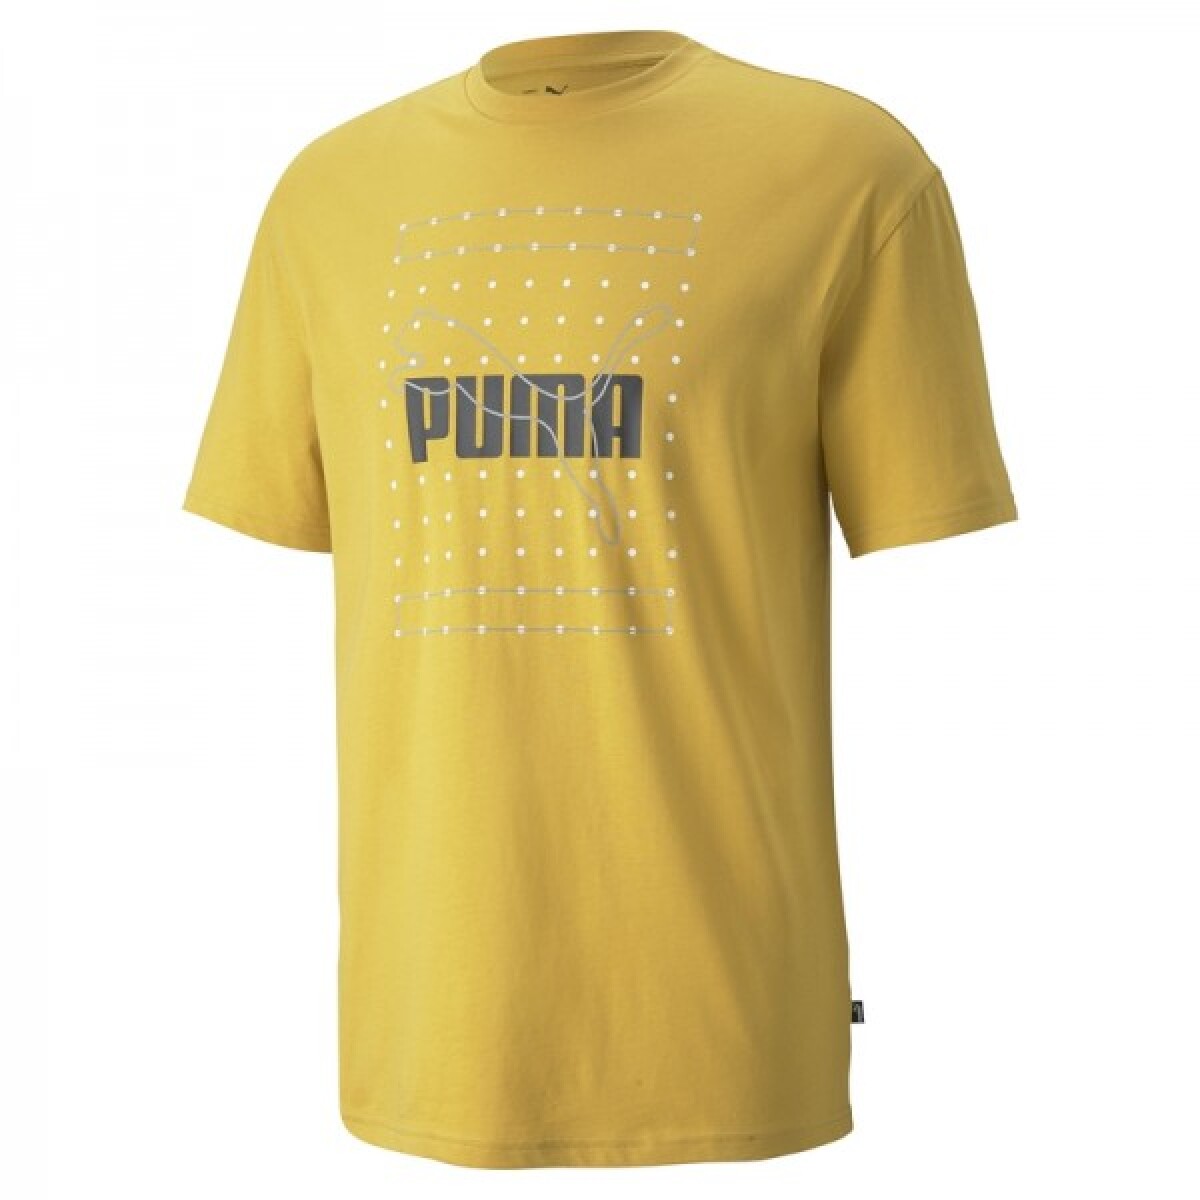 Remera Puma Training Hombre Reflective Graphic Mostaza - Color Único 